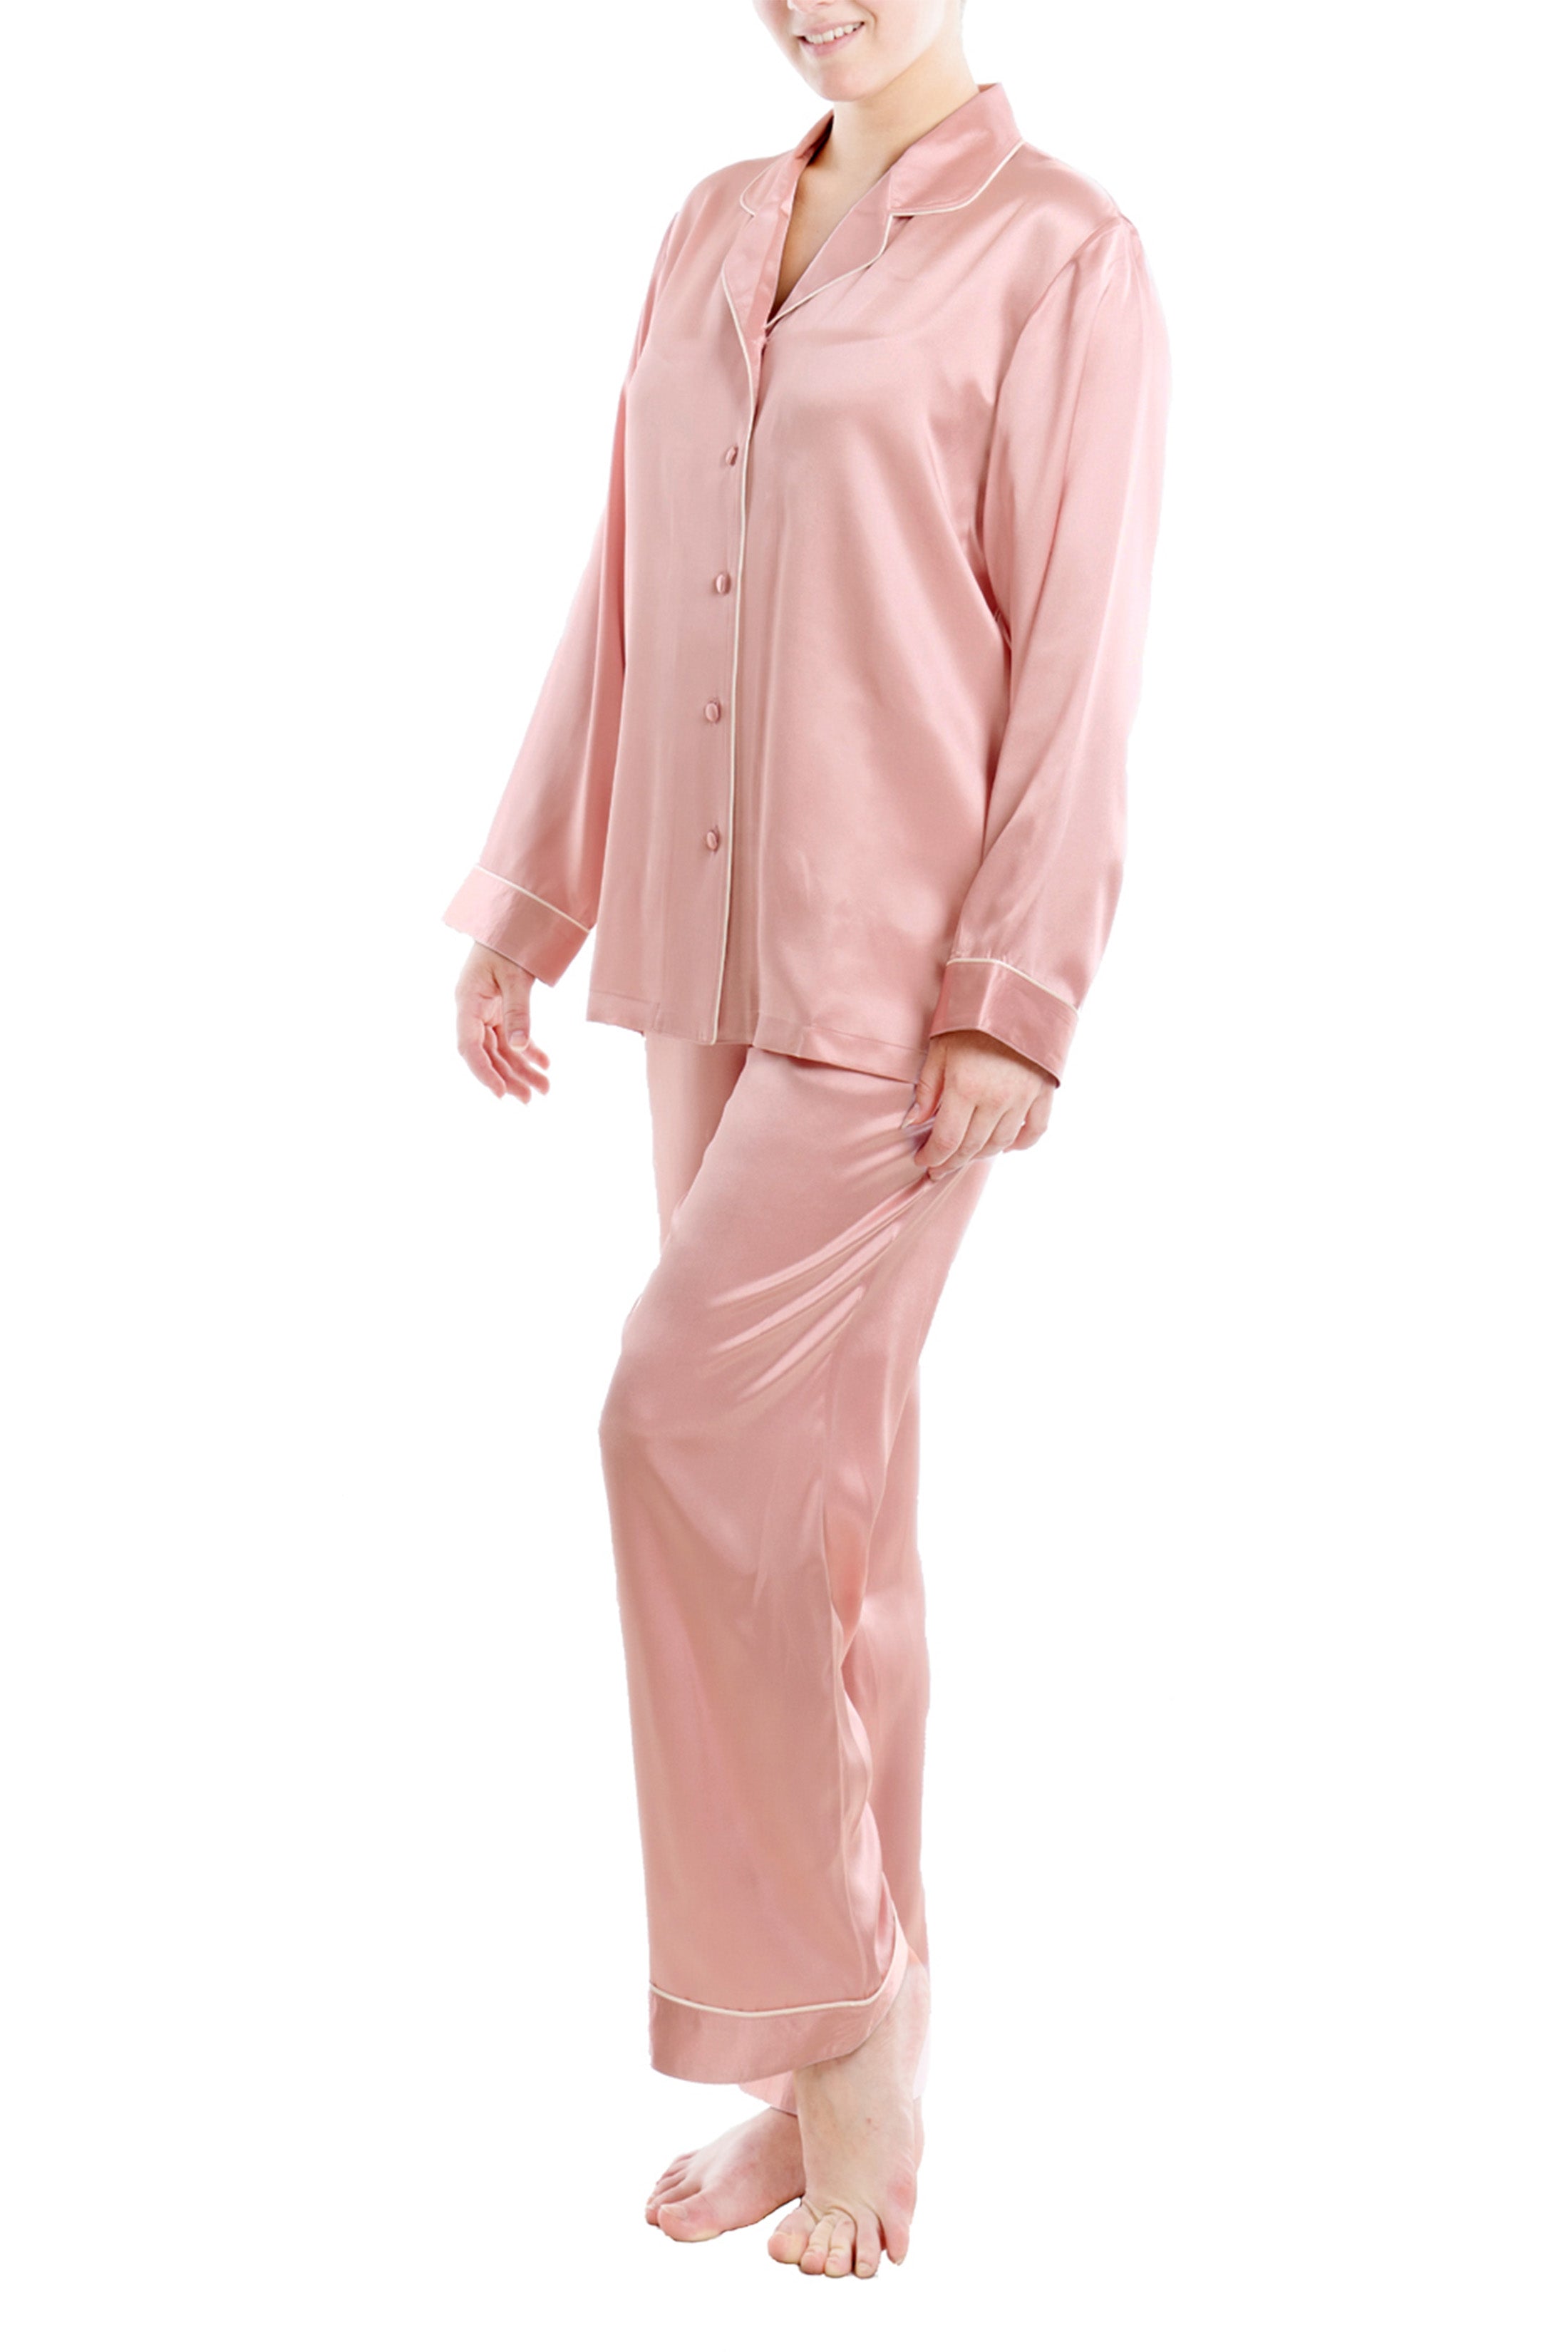 100% Silk Sleepwear Women's Silk Pajamas Set - Bridal Rose / XL